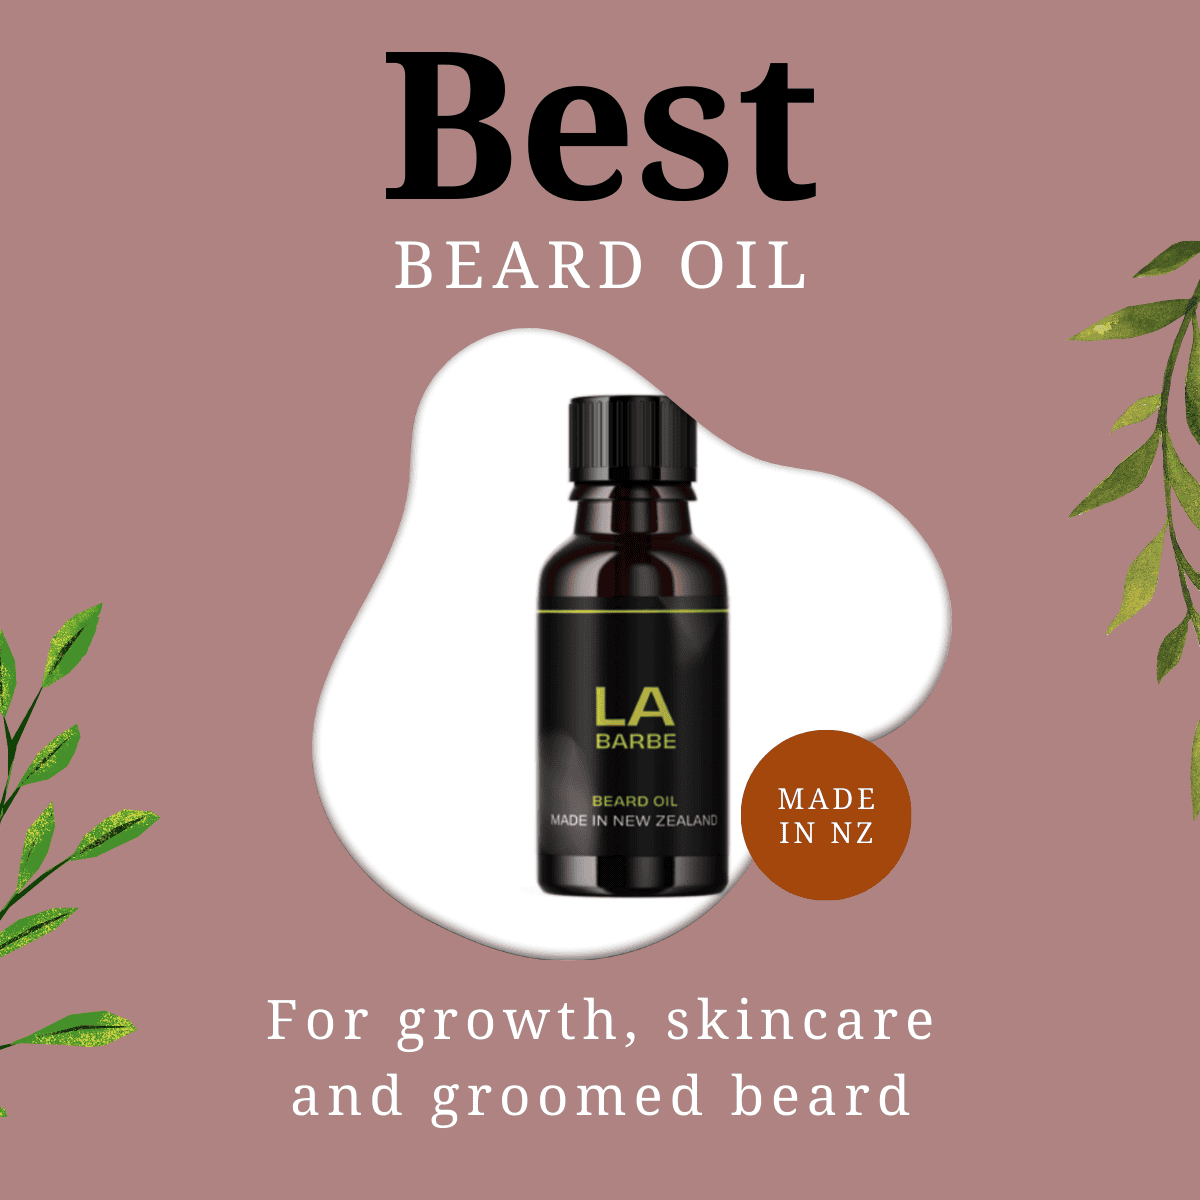 La Barbe- Best Beard Oil NZ Australia | #1 for Growth Skincare Groom